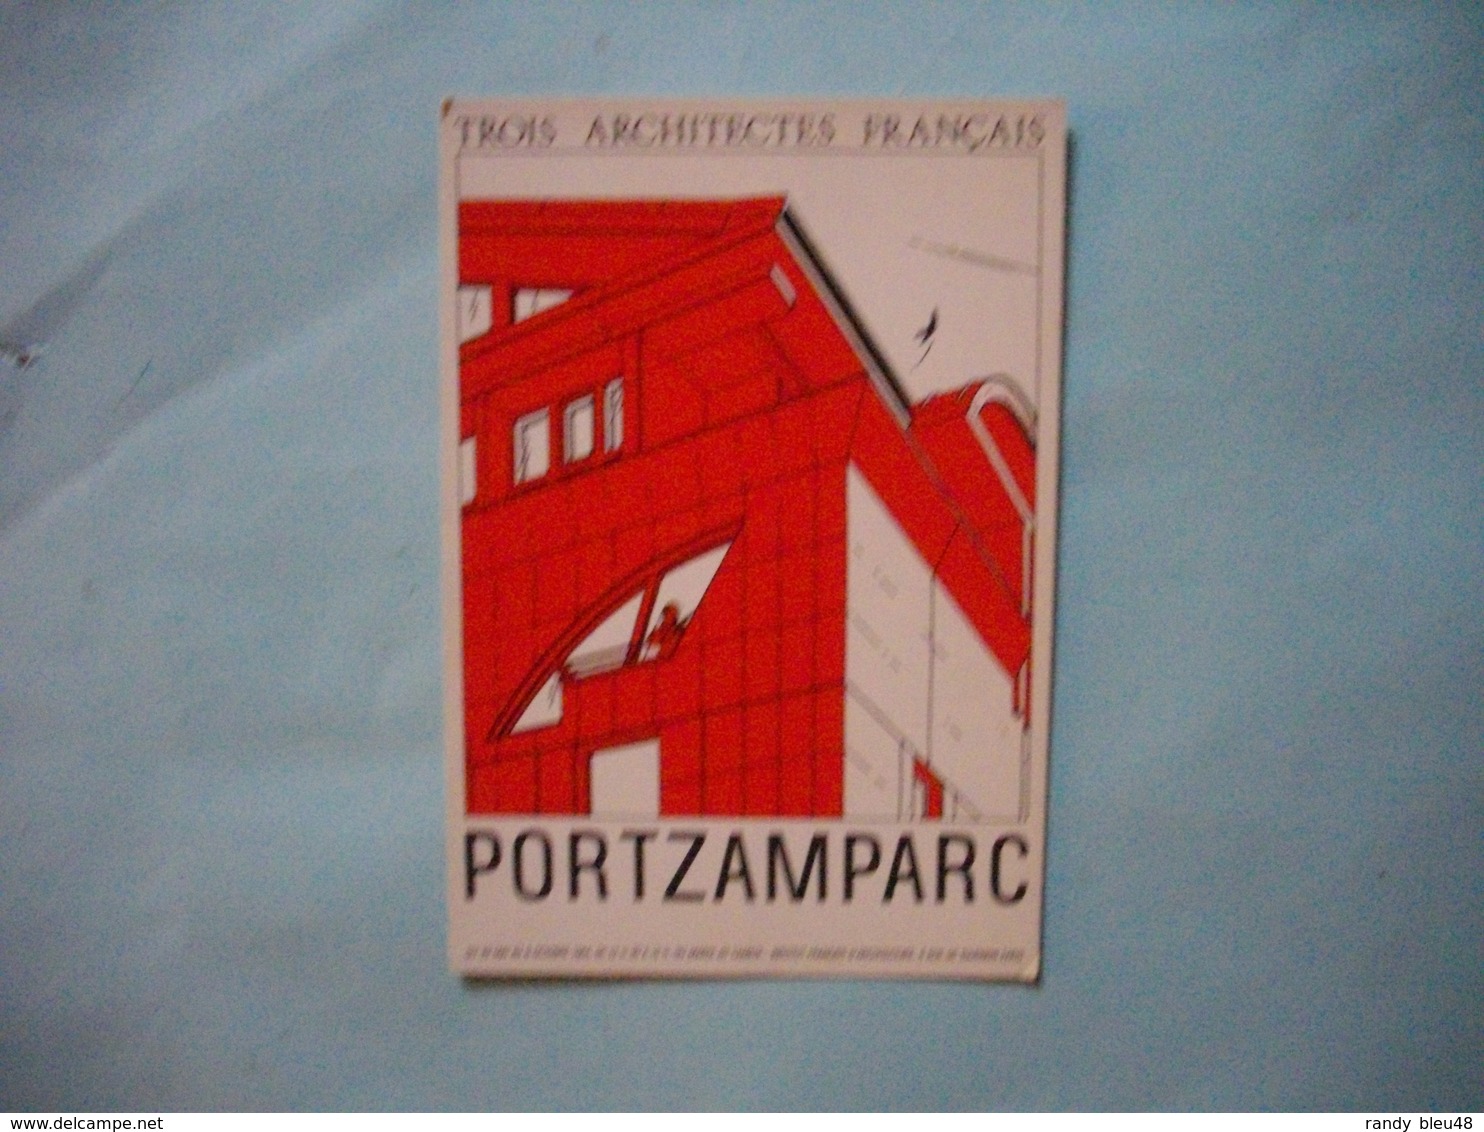 Carte Invitation  -  Vernissage  -  Christian De PORTZAMPARC  -  Institut D'Architecture  -  1984  - - Inaugurations